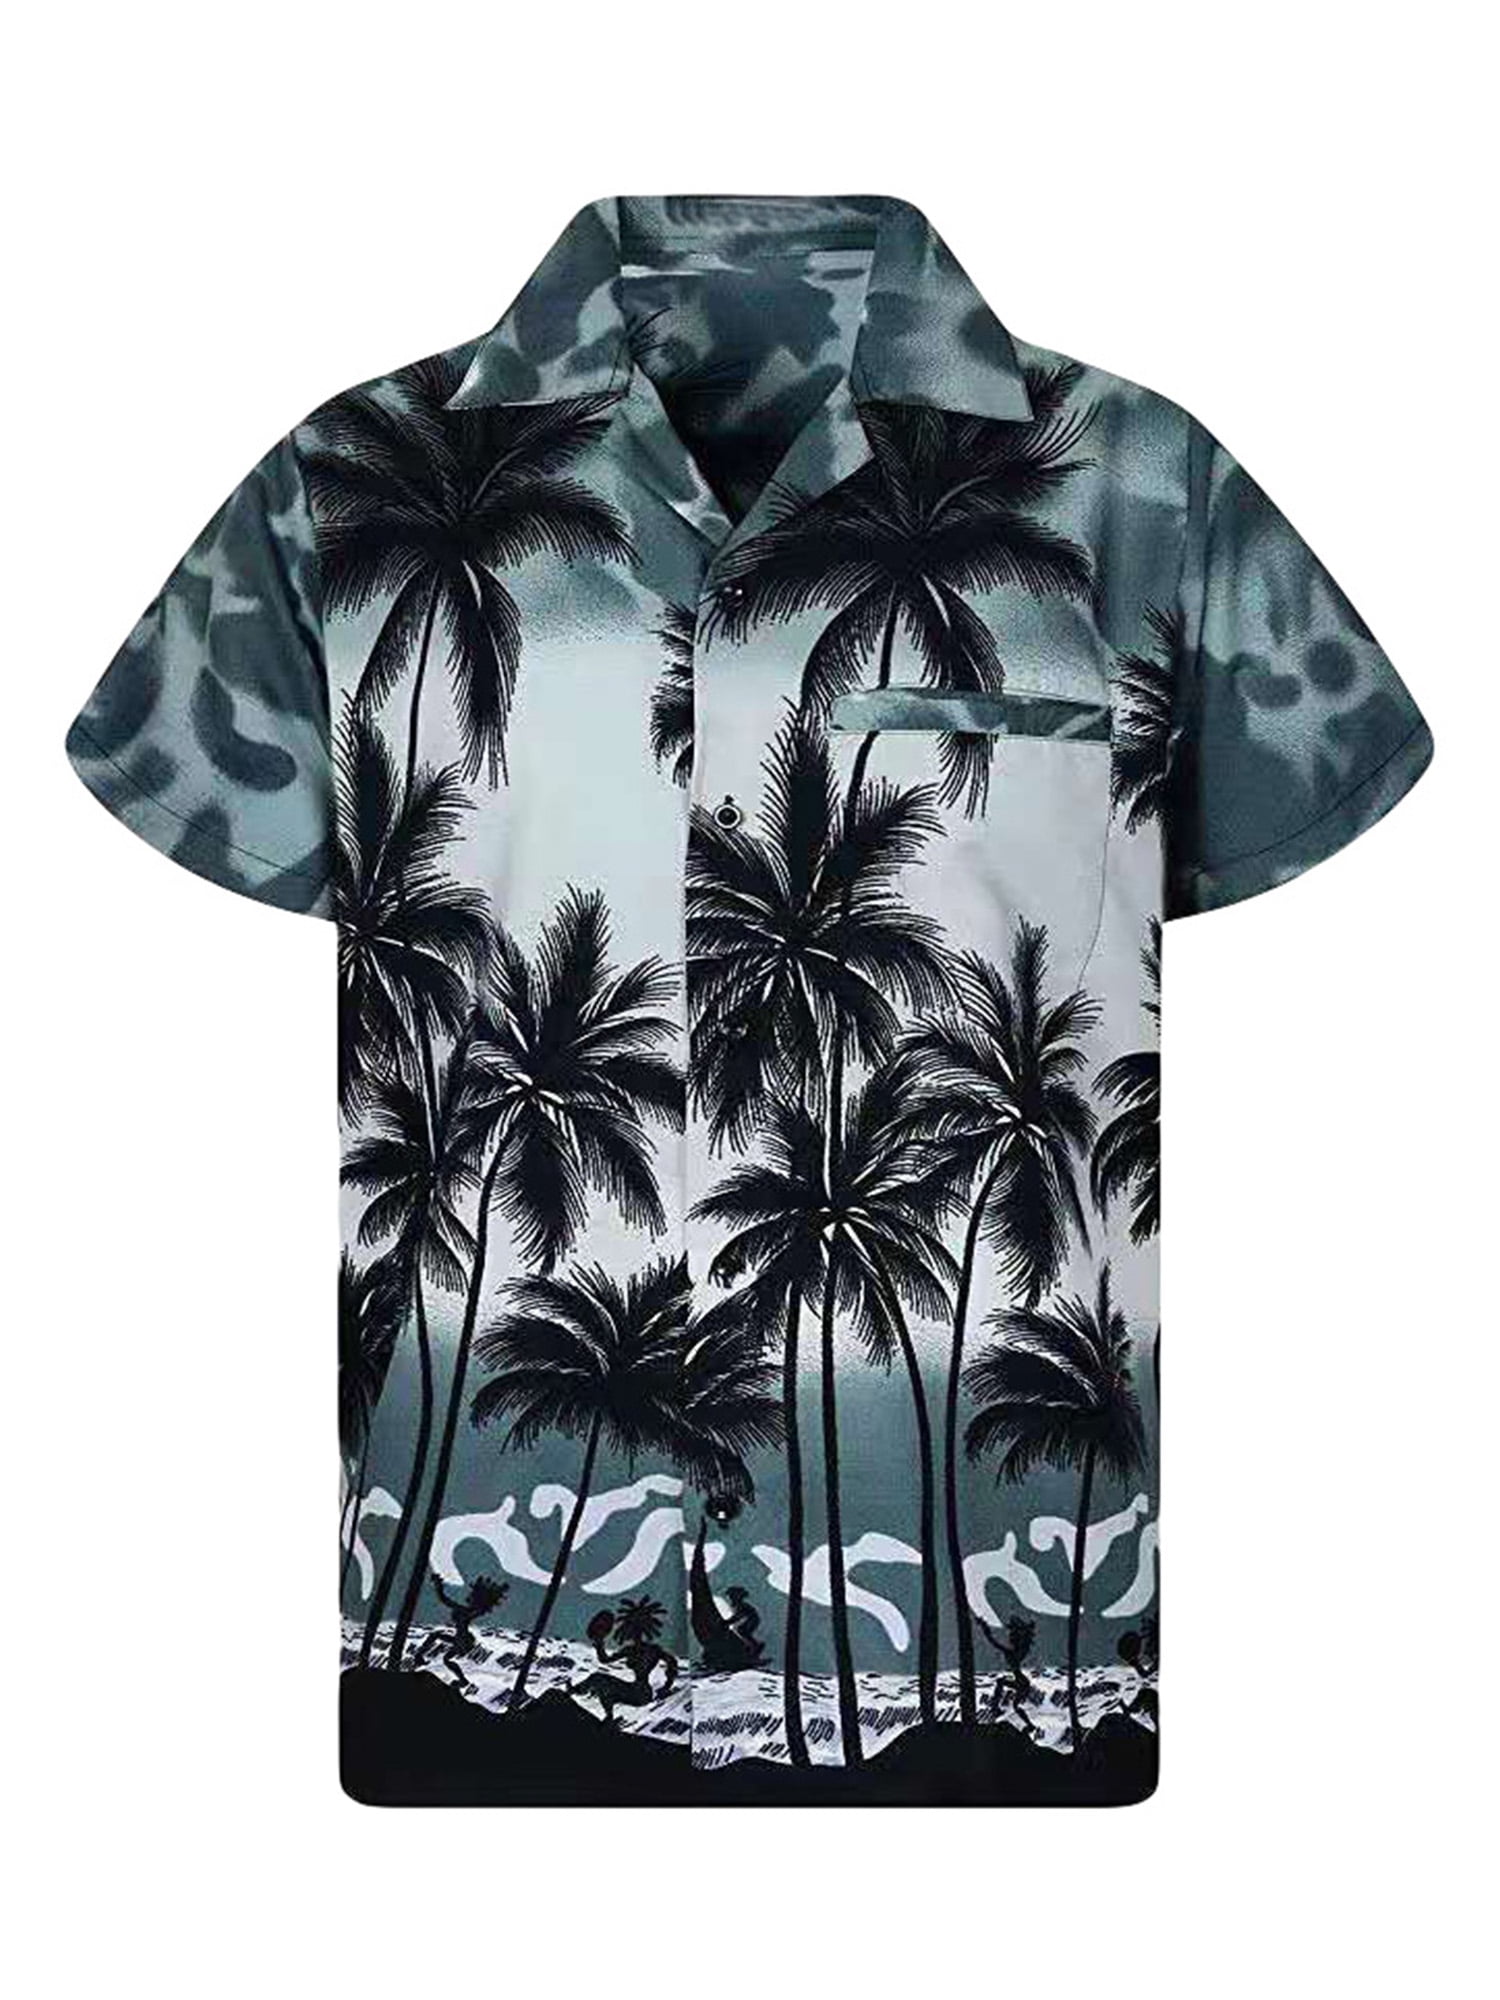 Mens Tropical Hawaiian Custom Made Shirt Casual Button Down Short Sleeve Shirt Beach Tee Palm Tree Printed Blouse 